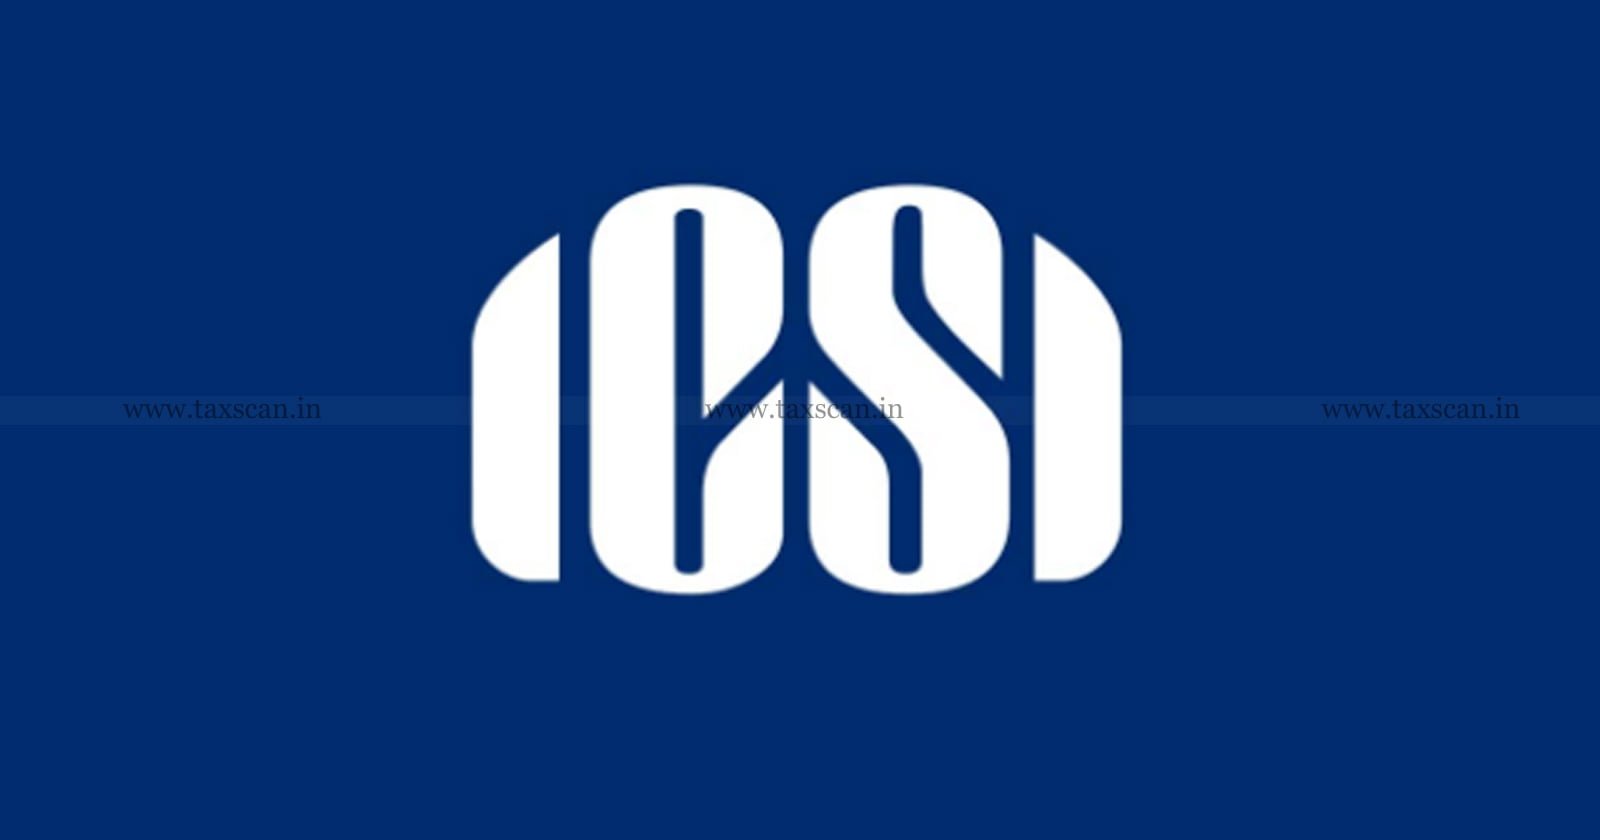 ICSI - CS - CS Executive - cs executive results - december attempt cs results - executive december 2022 results - taxscan